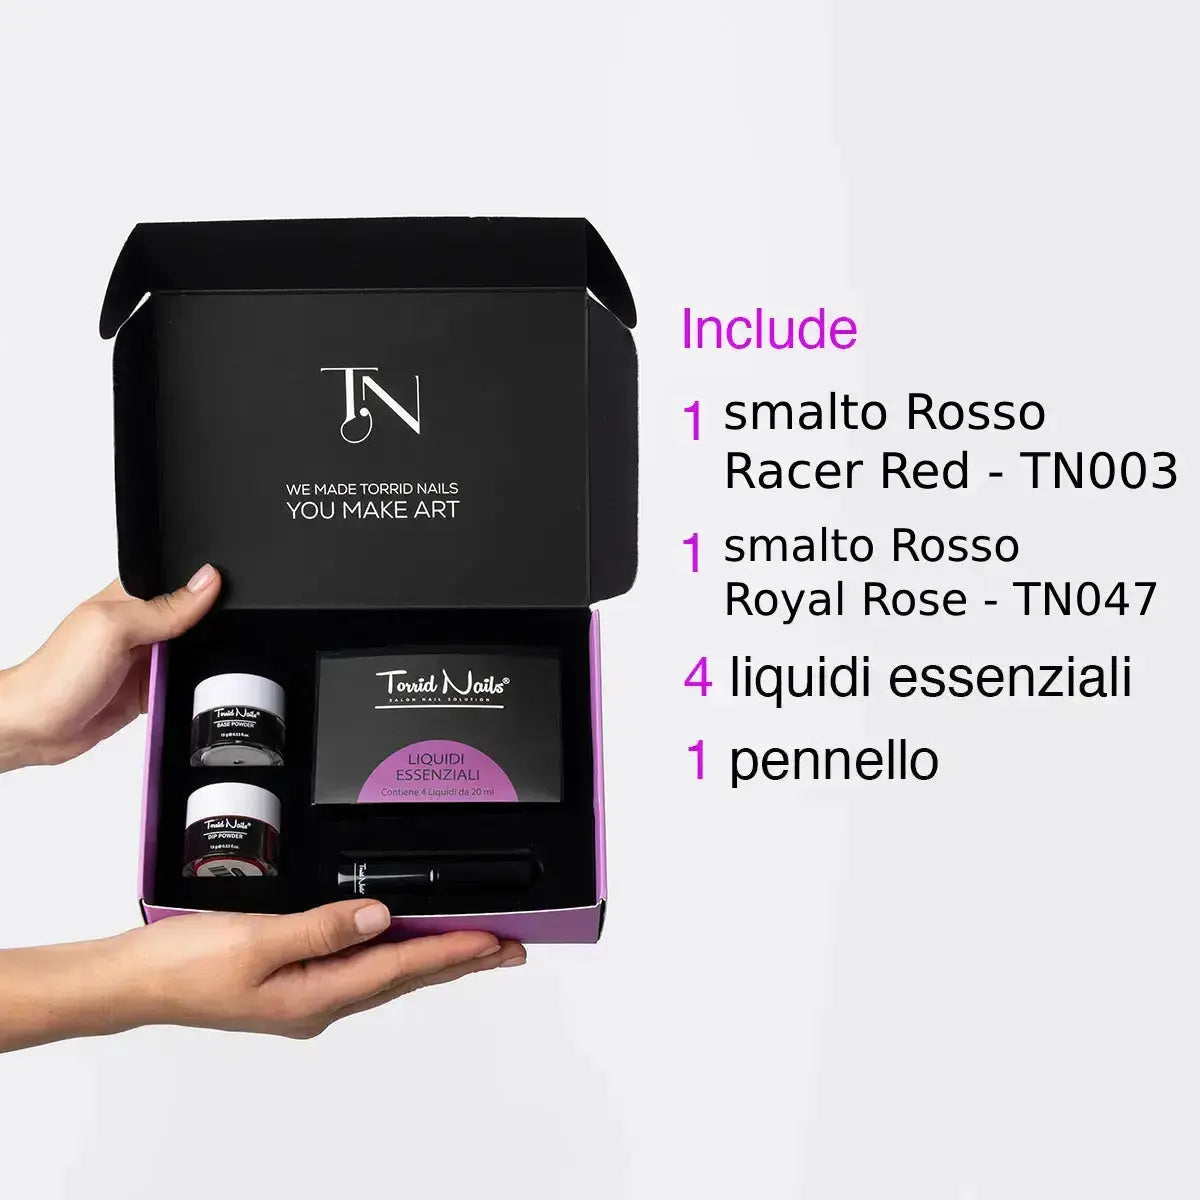 Limited Edition - Box San Valentino Torrid Nails